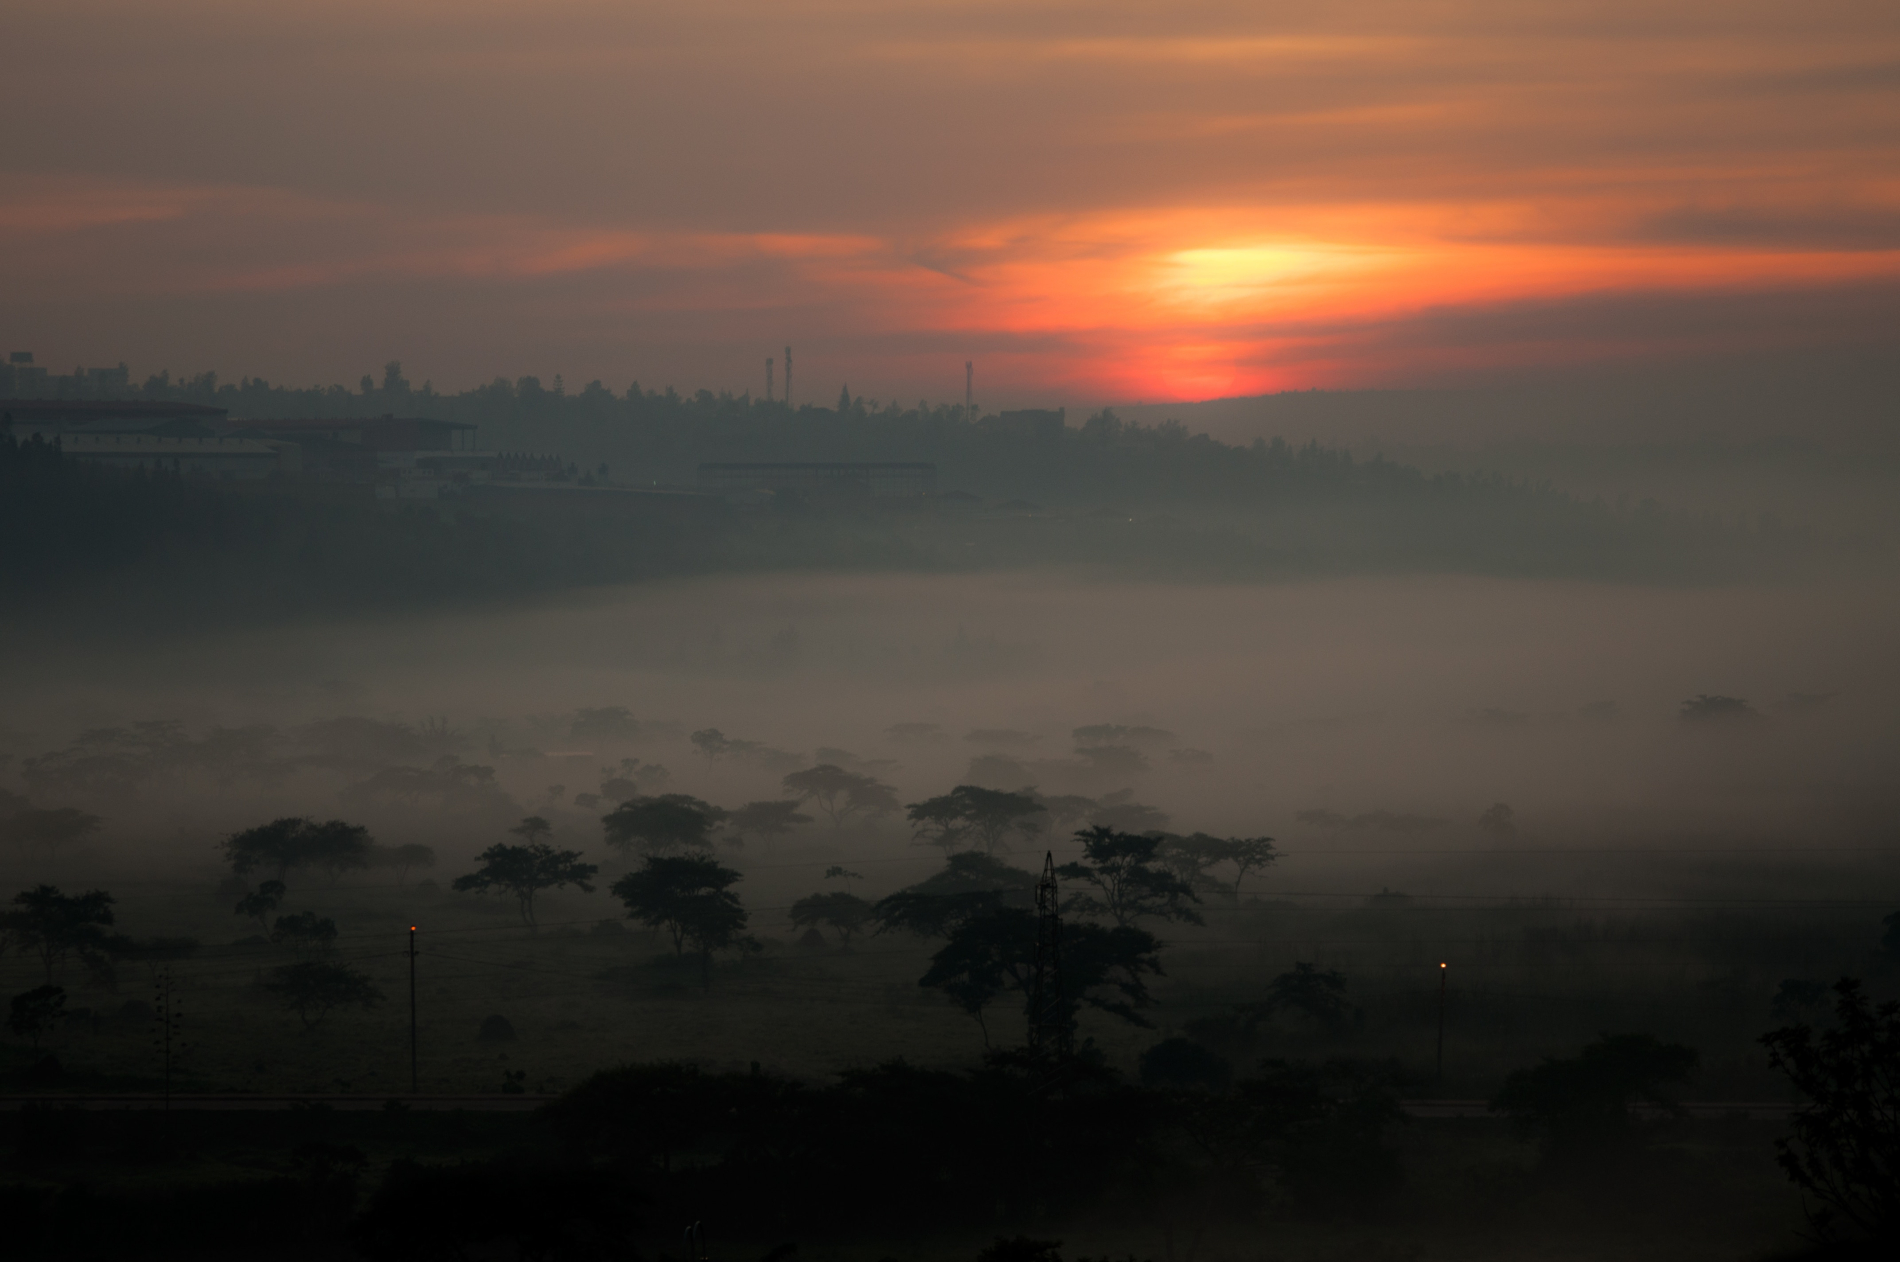 Low sun over a hazy African plain. By Maxime Niyomwungeri (Unsplash).